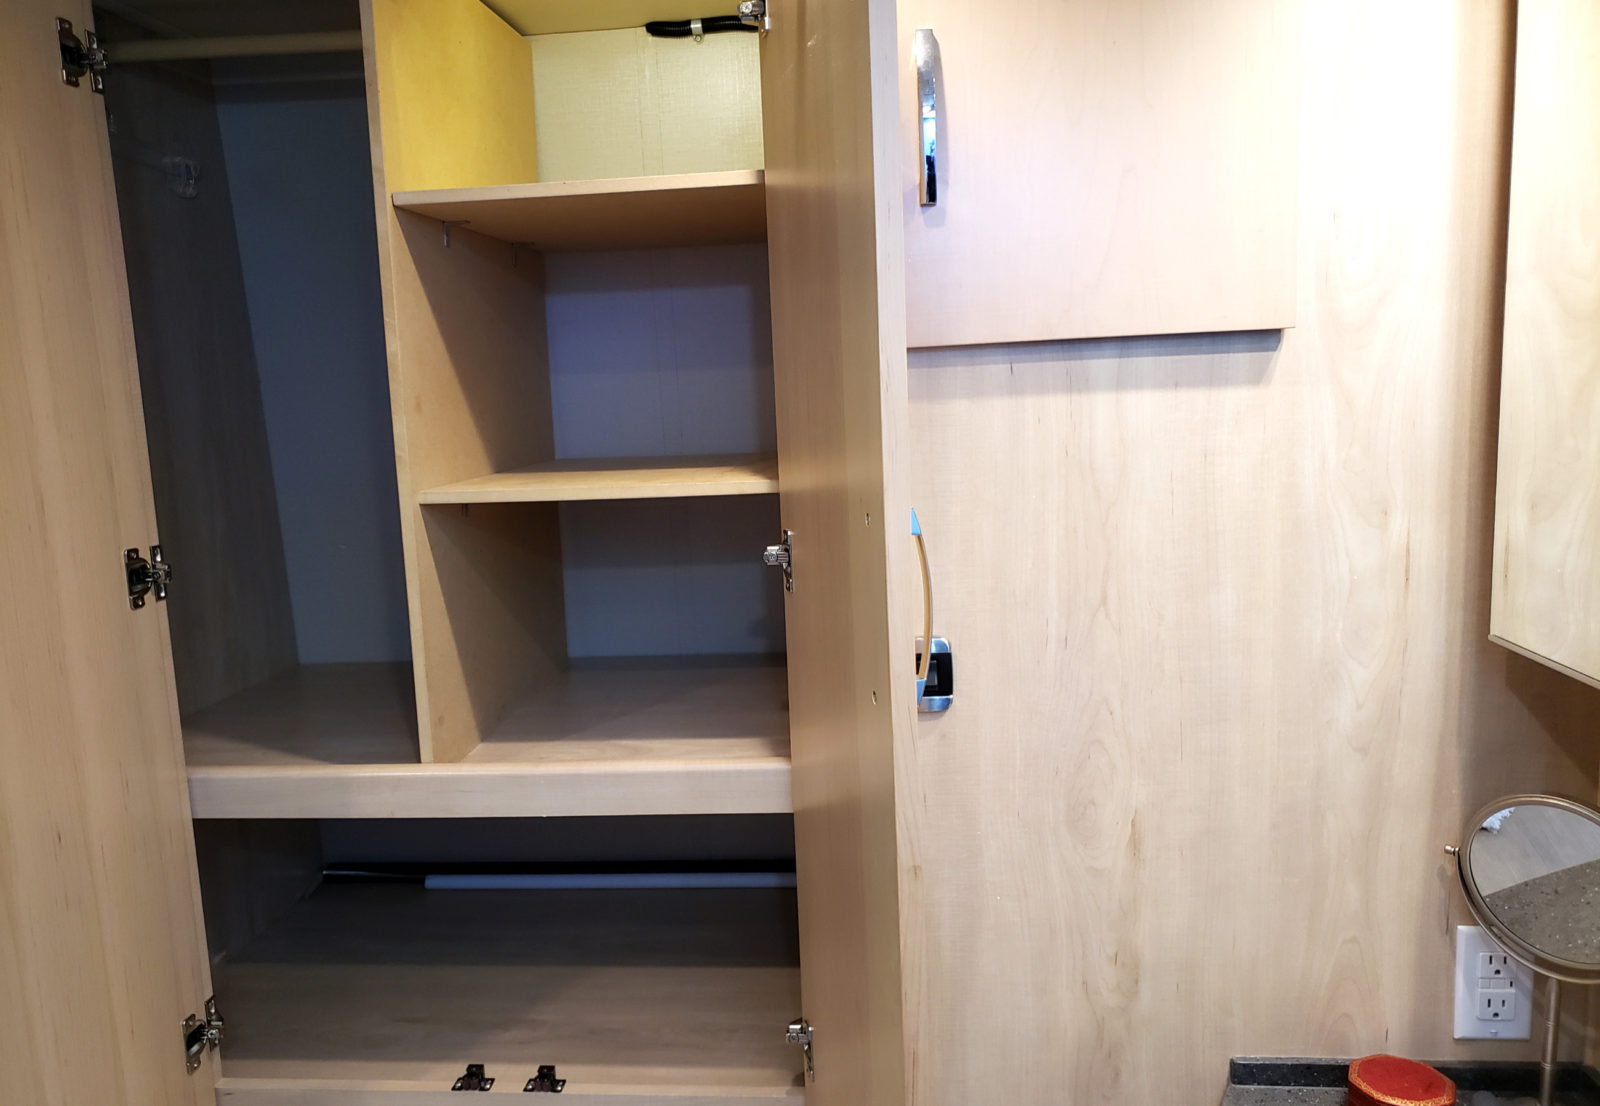 Inside RV wardrobe with shelves